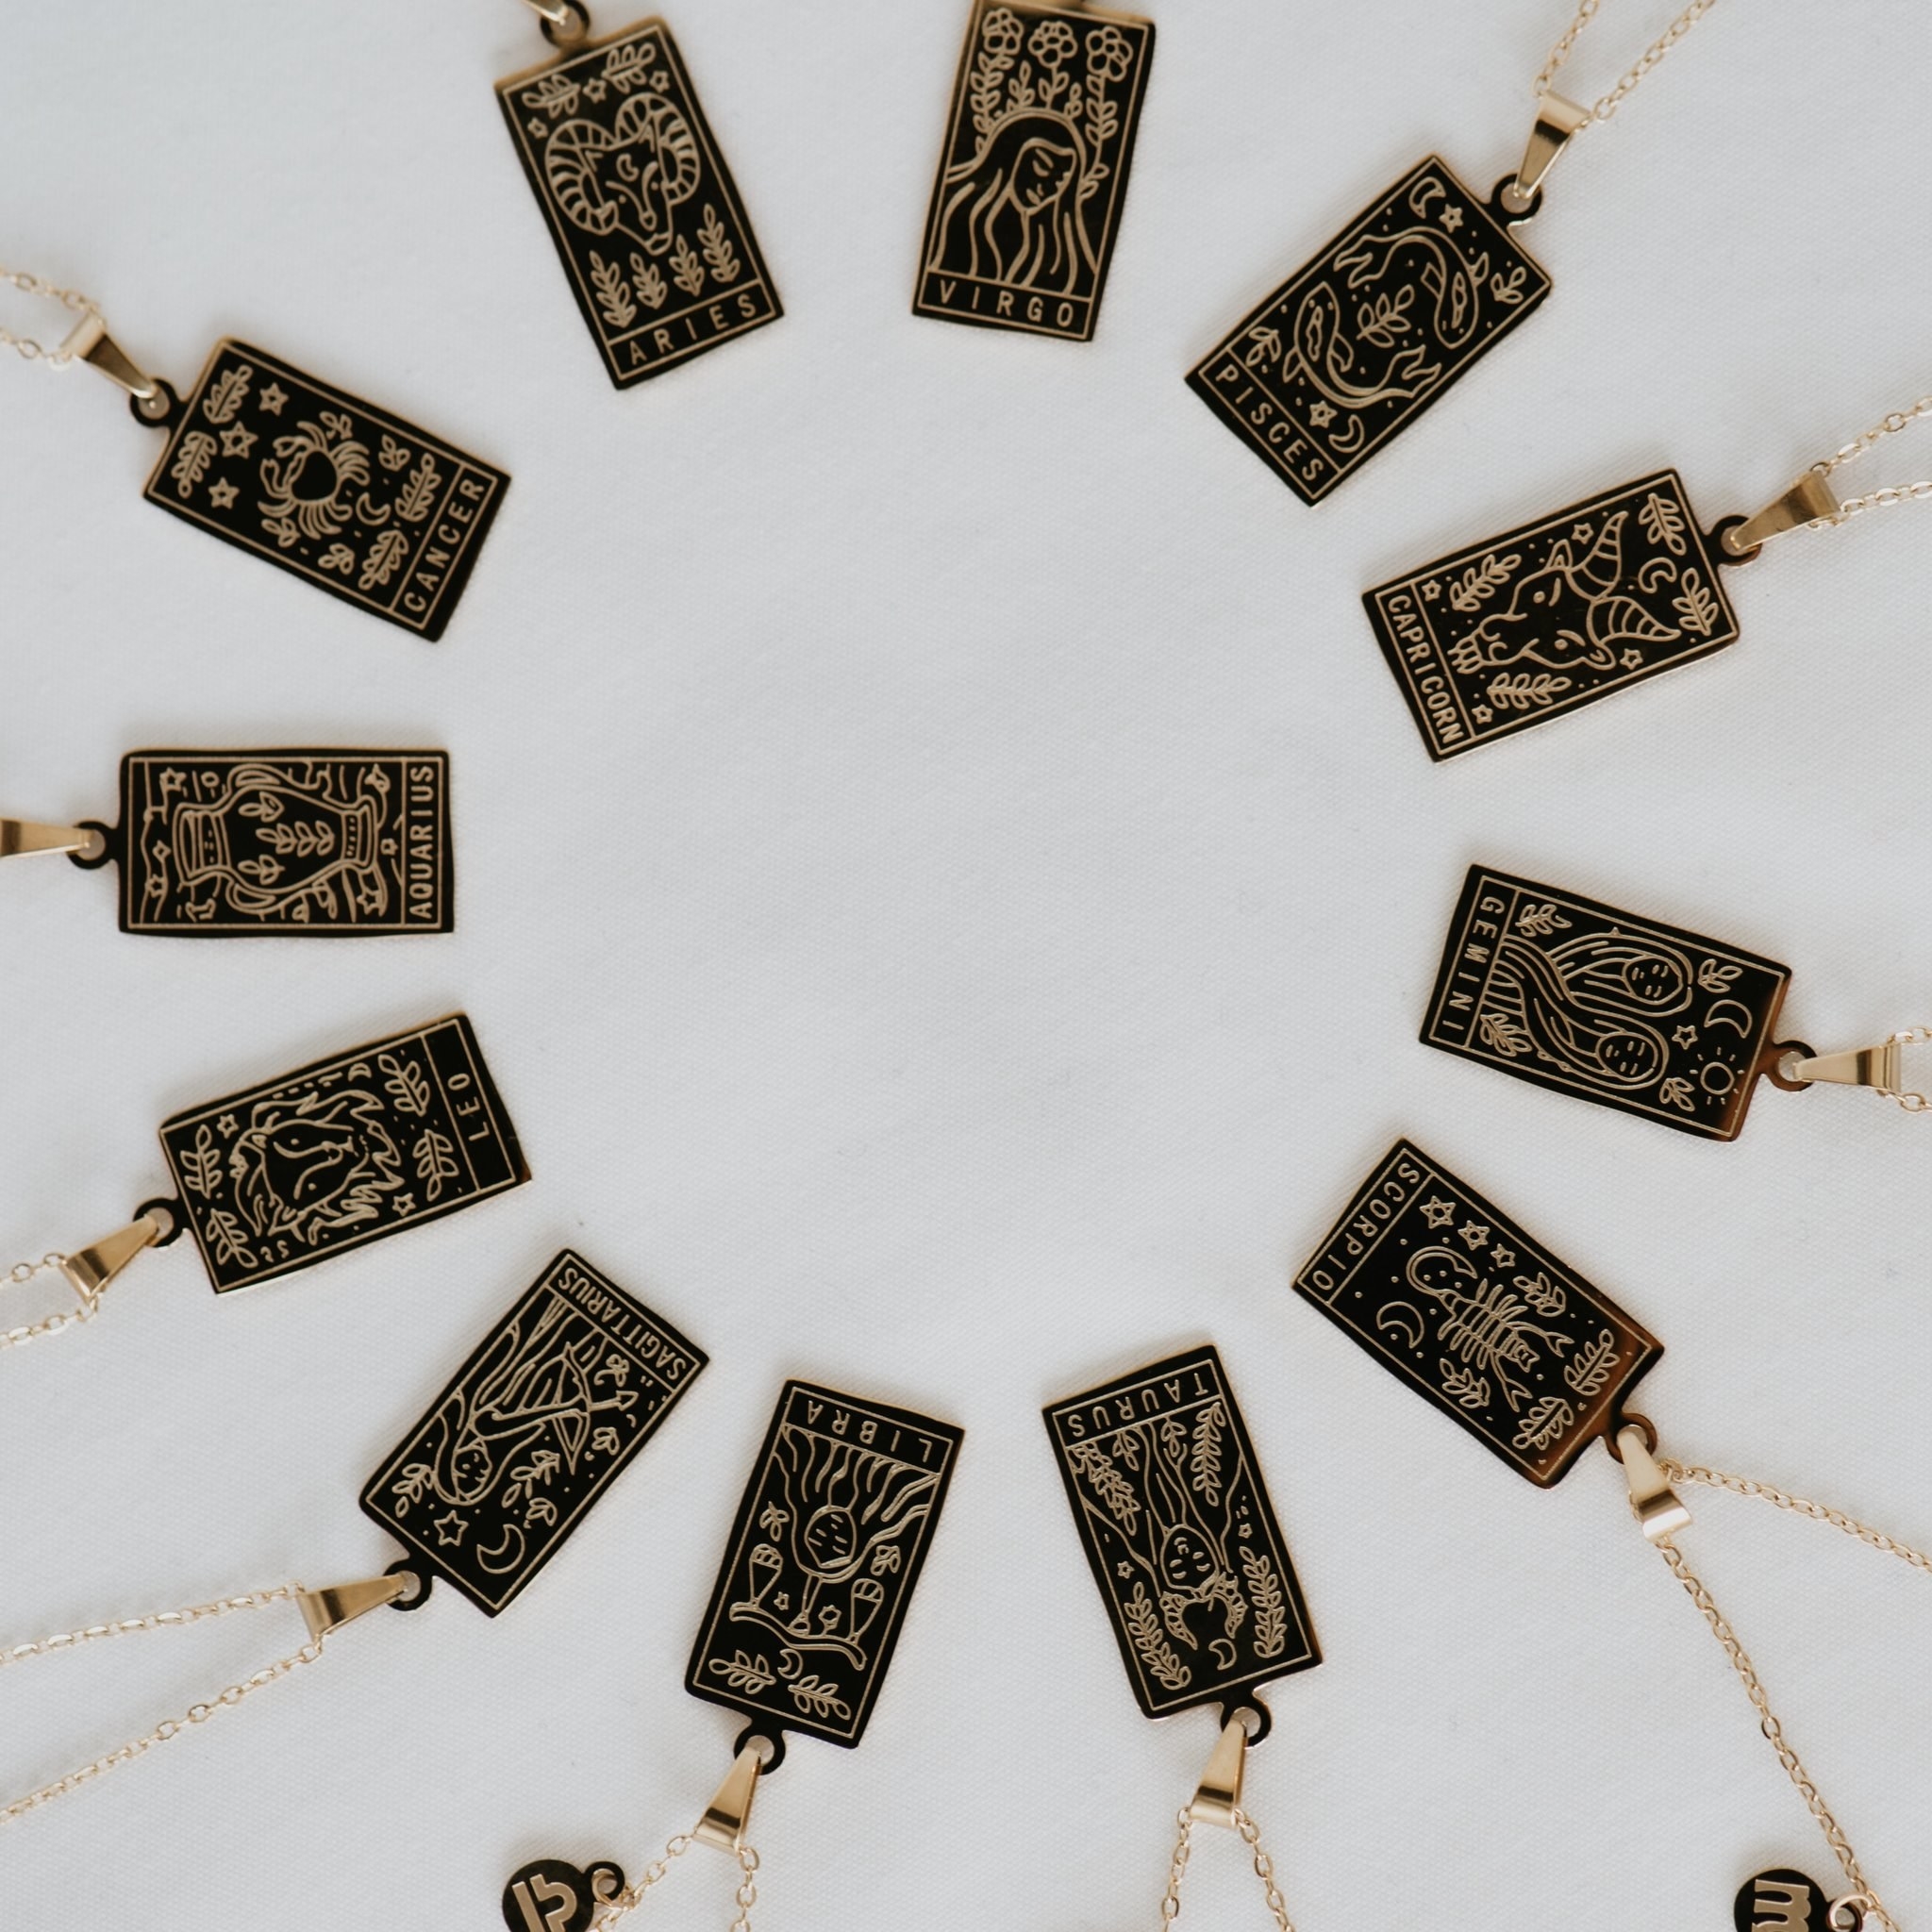 small metal taraot card pendants